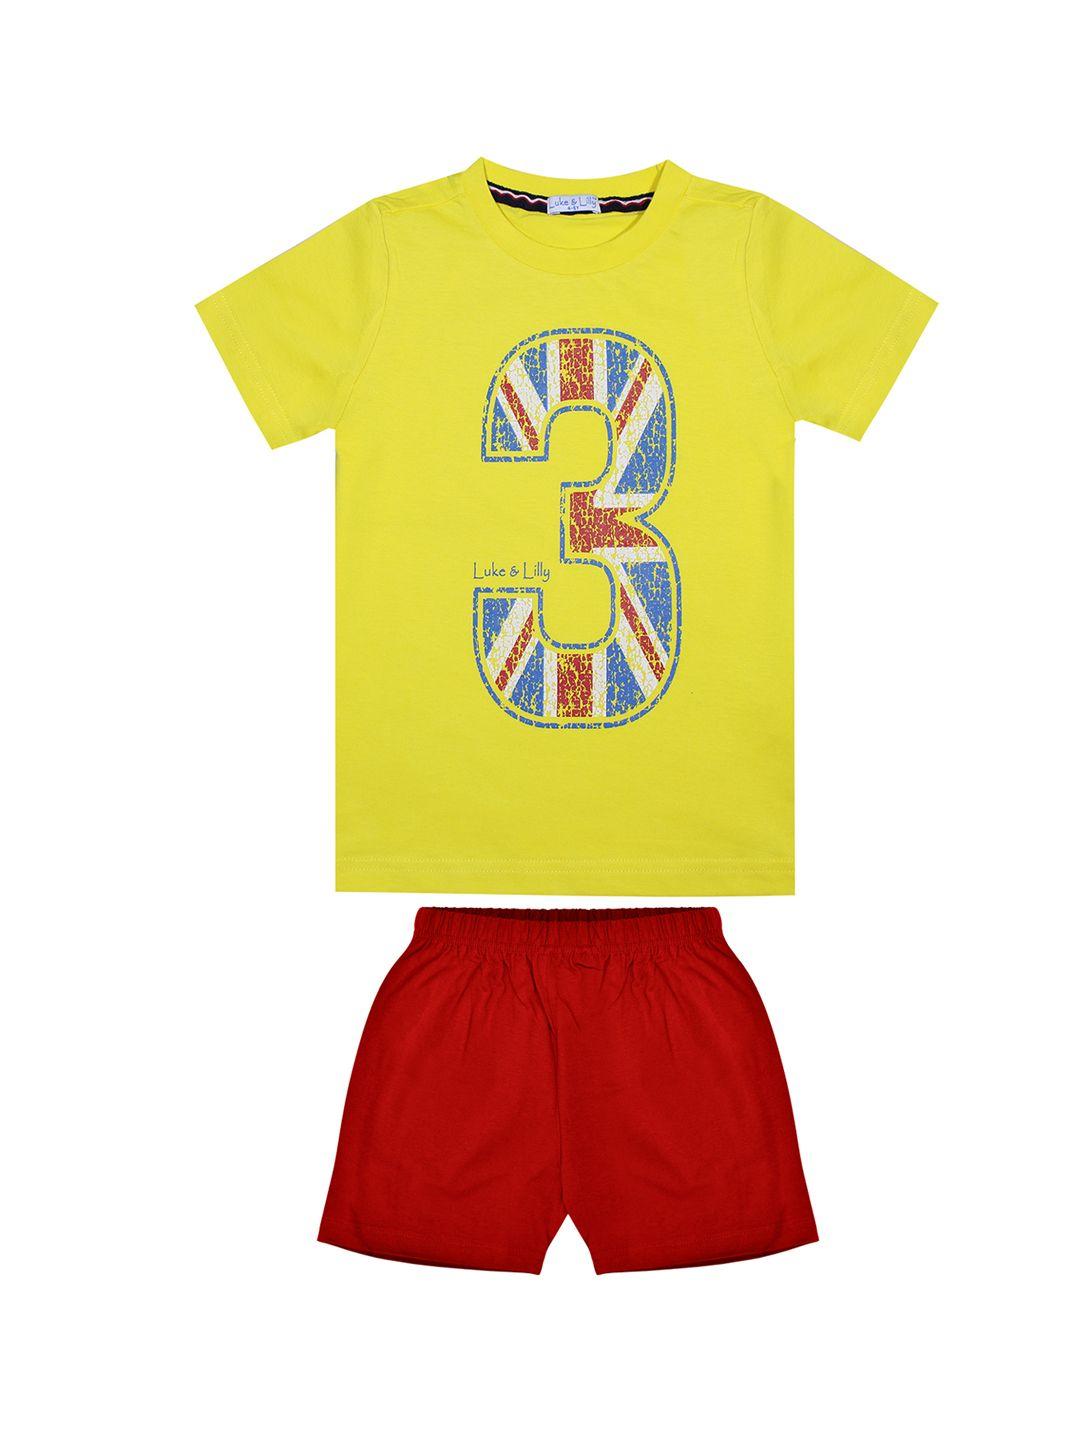 luke-&-lilly-boys-yellow-&-red-printed-clothing-set